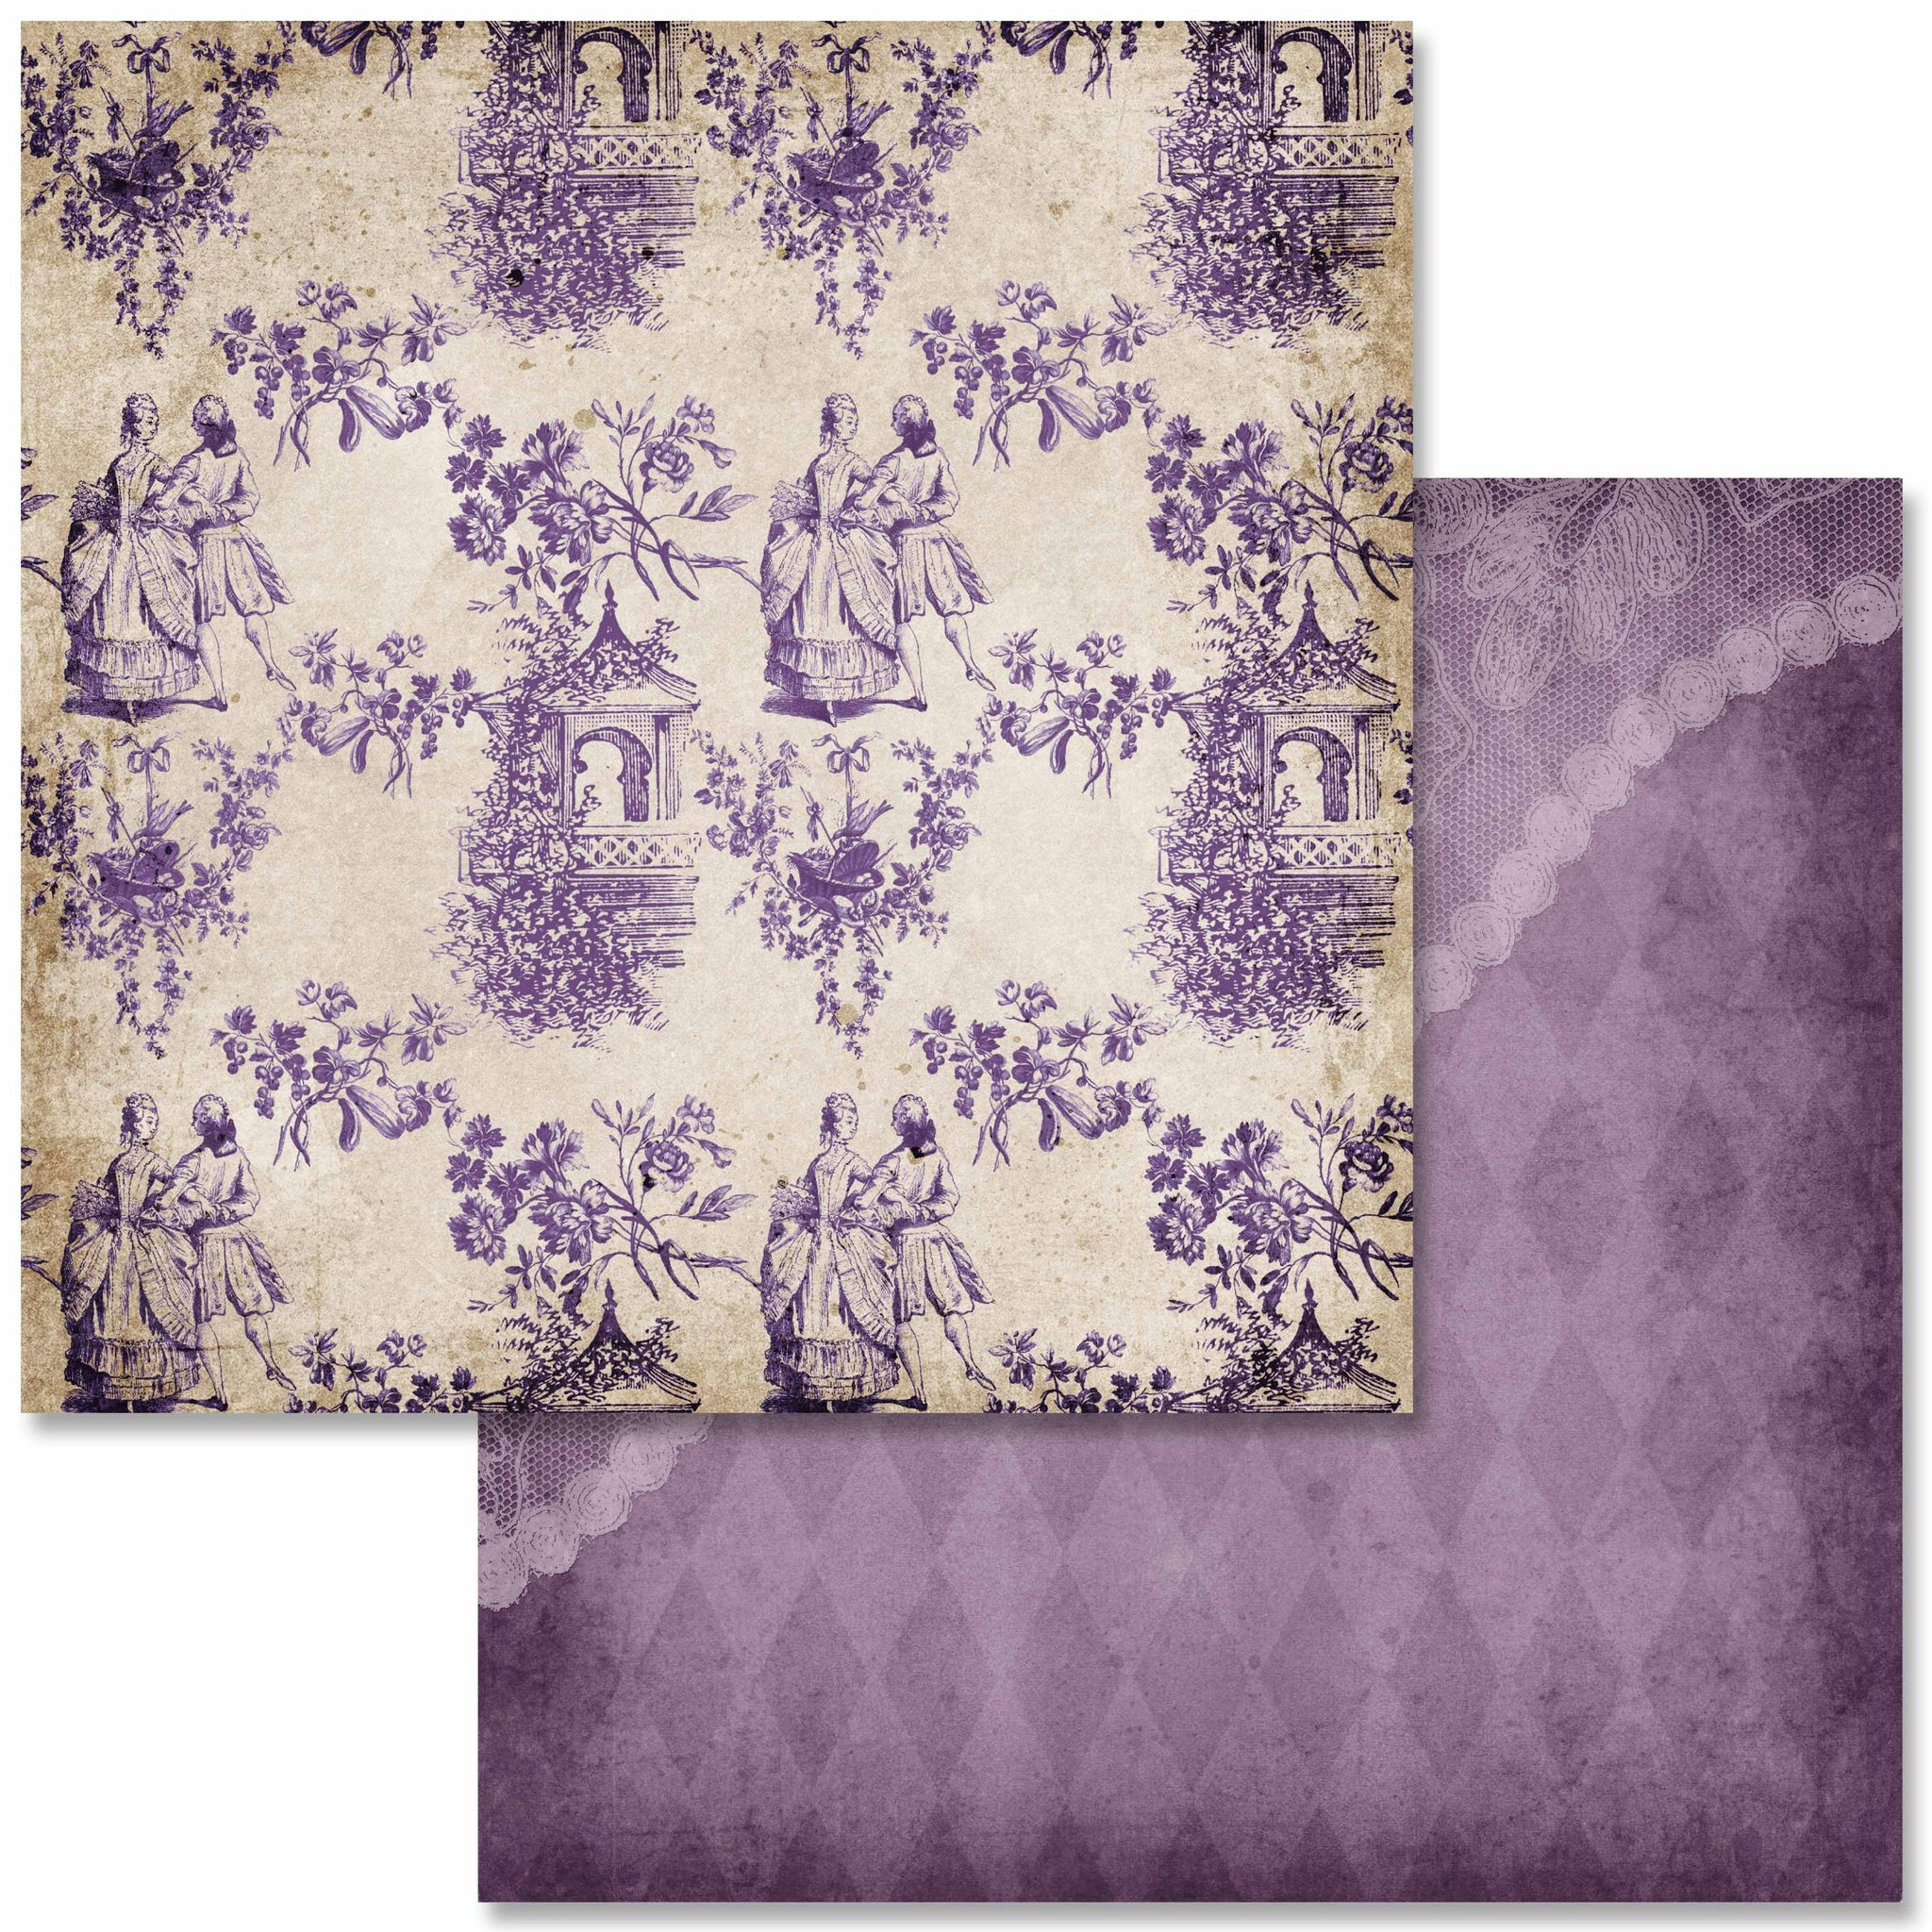 Vintage Lavender Scrapbook Paper, Decoupage Queen, 24 Designs – My  Victorian Heart